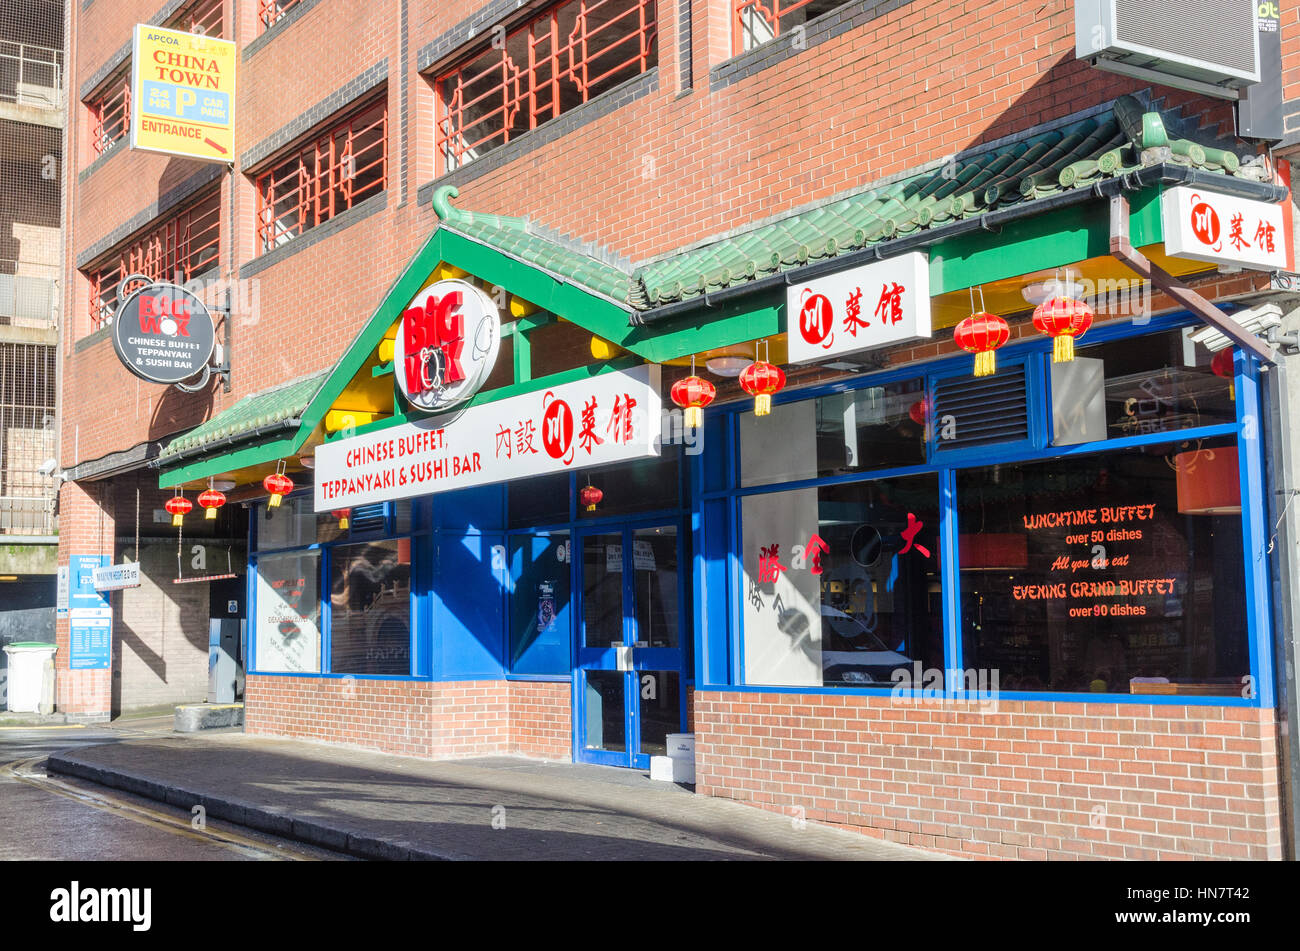 The Big Wok chinese buffet teppanyaki and sushi bar in Wrottesley Street, Birmingham Stock Photo